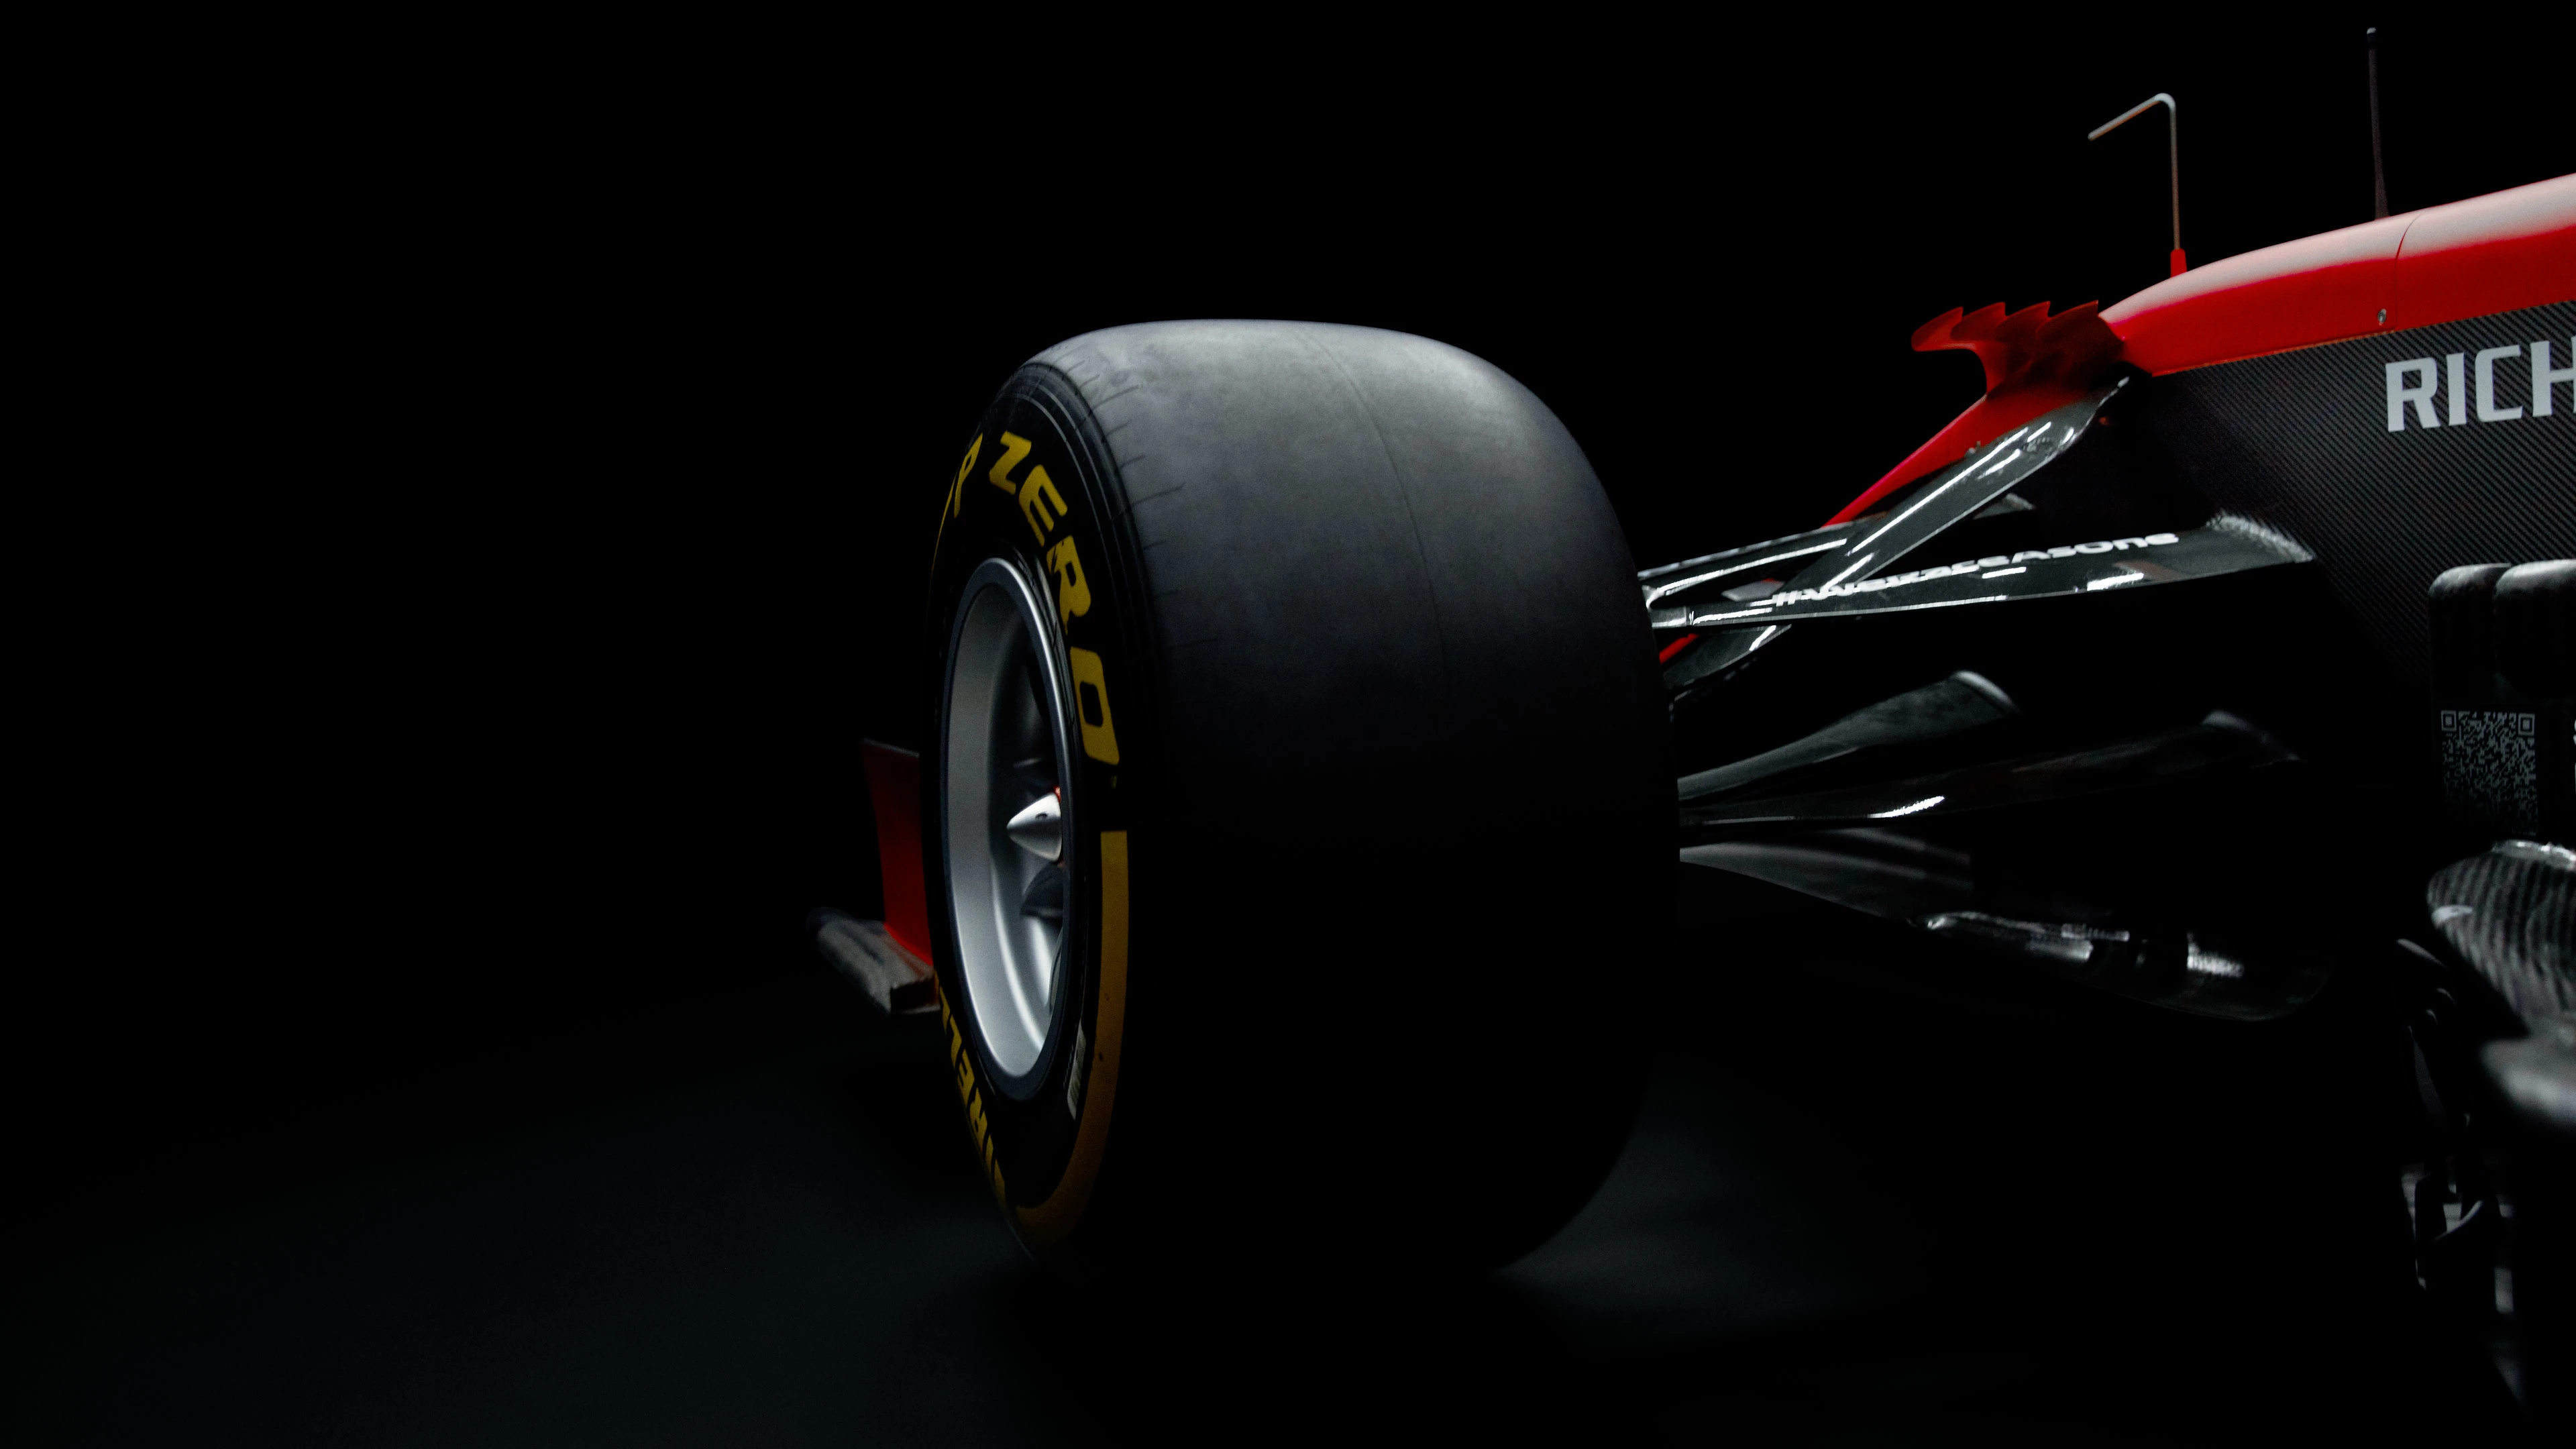 Image of the back wheel of a Scuderia Ferrari racing car